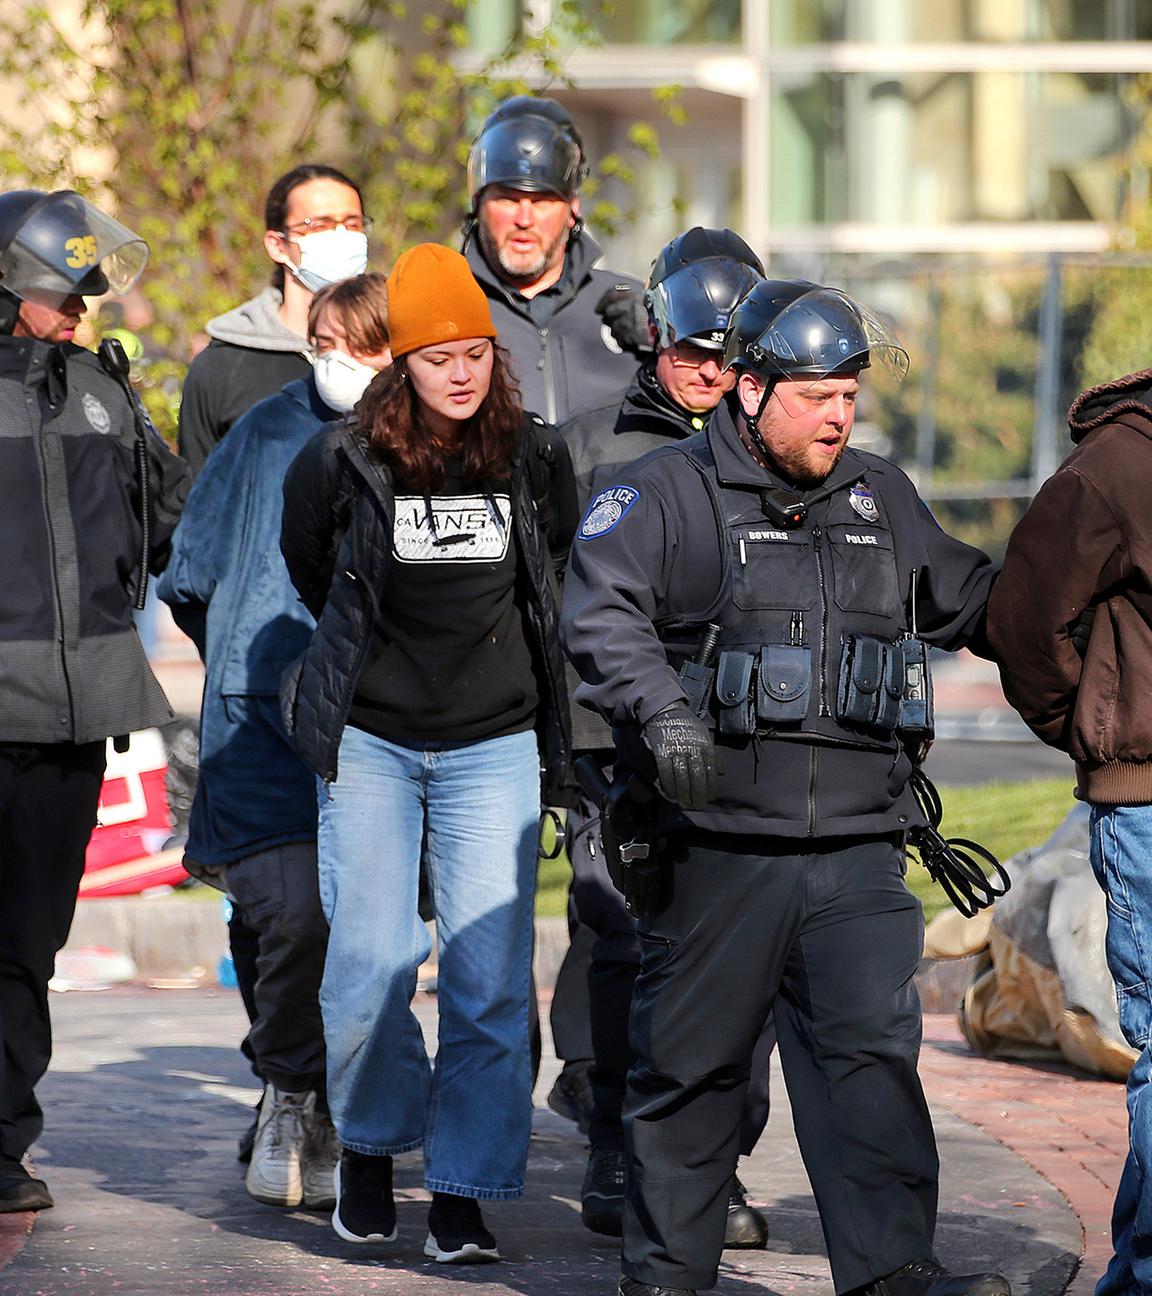 US Israel Palestinians Campus Protests Boston